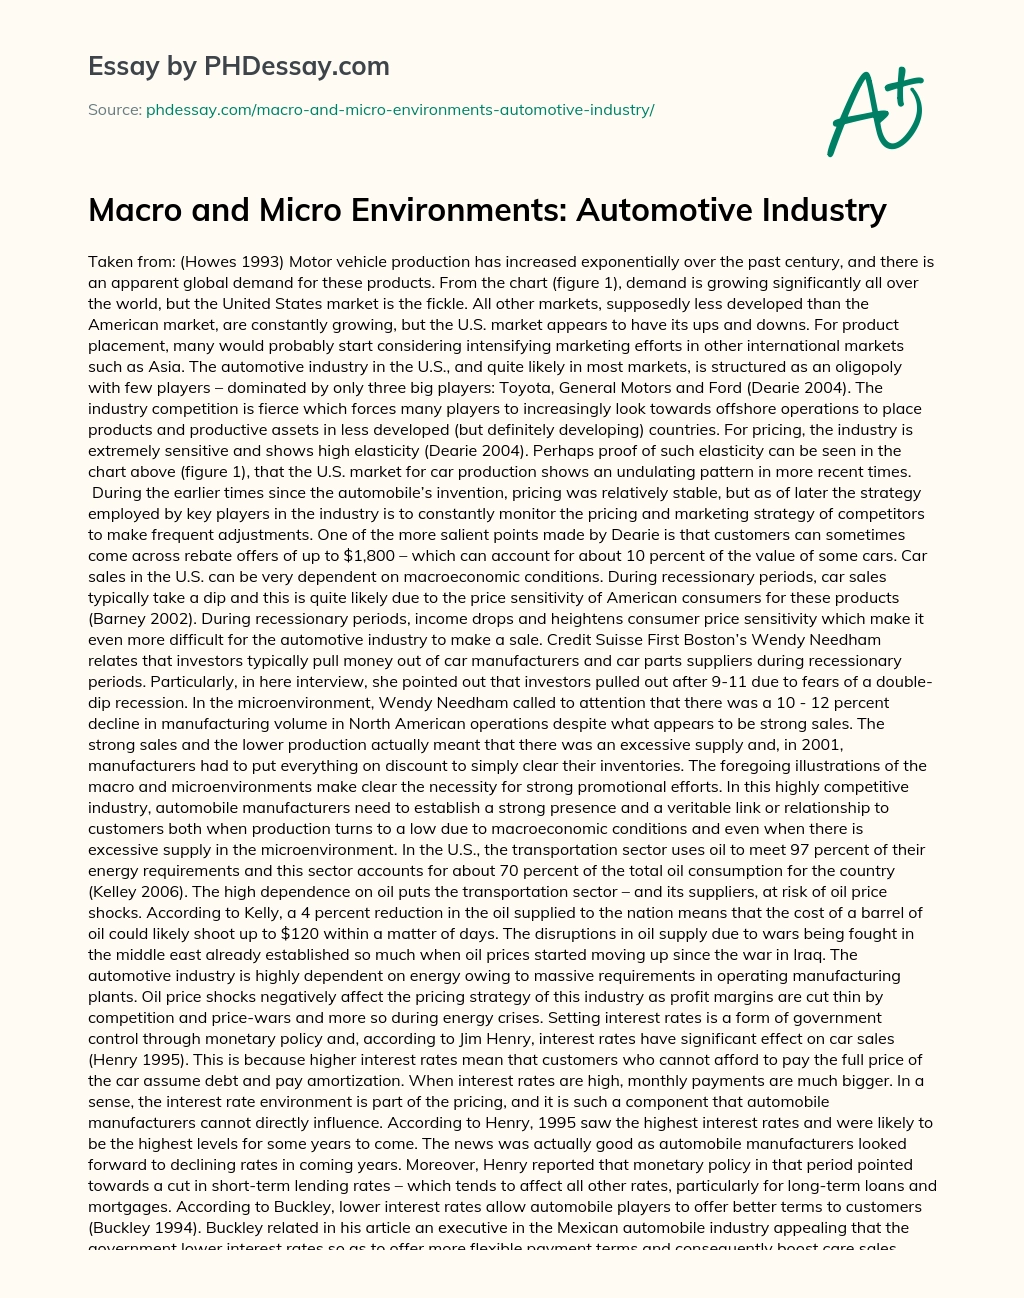 Macro and Micro Environments: Automotive Industry essay